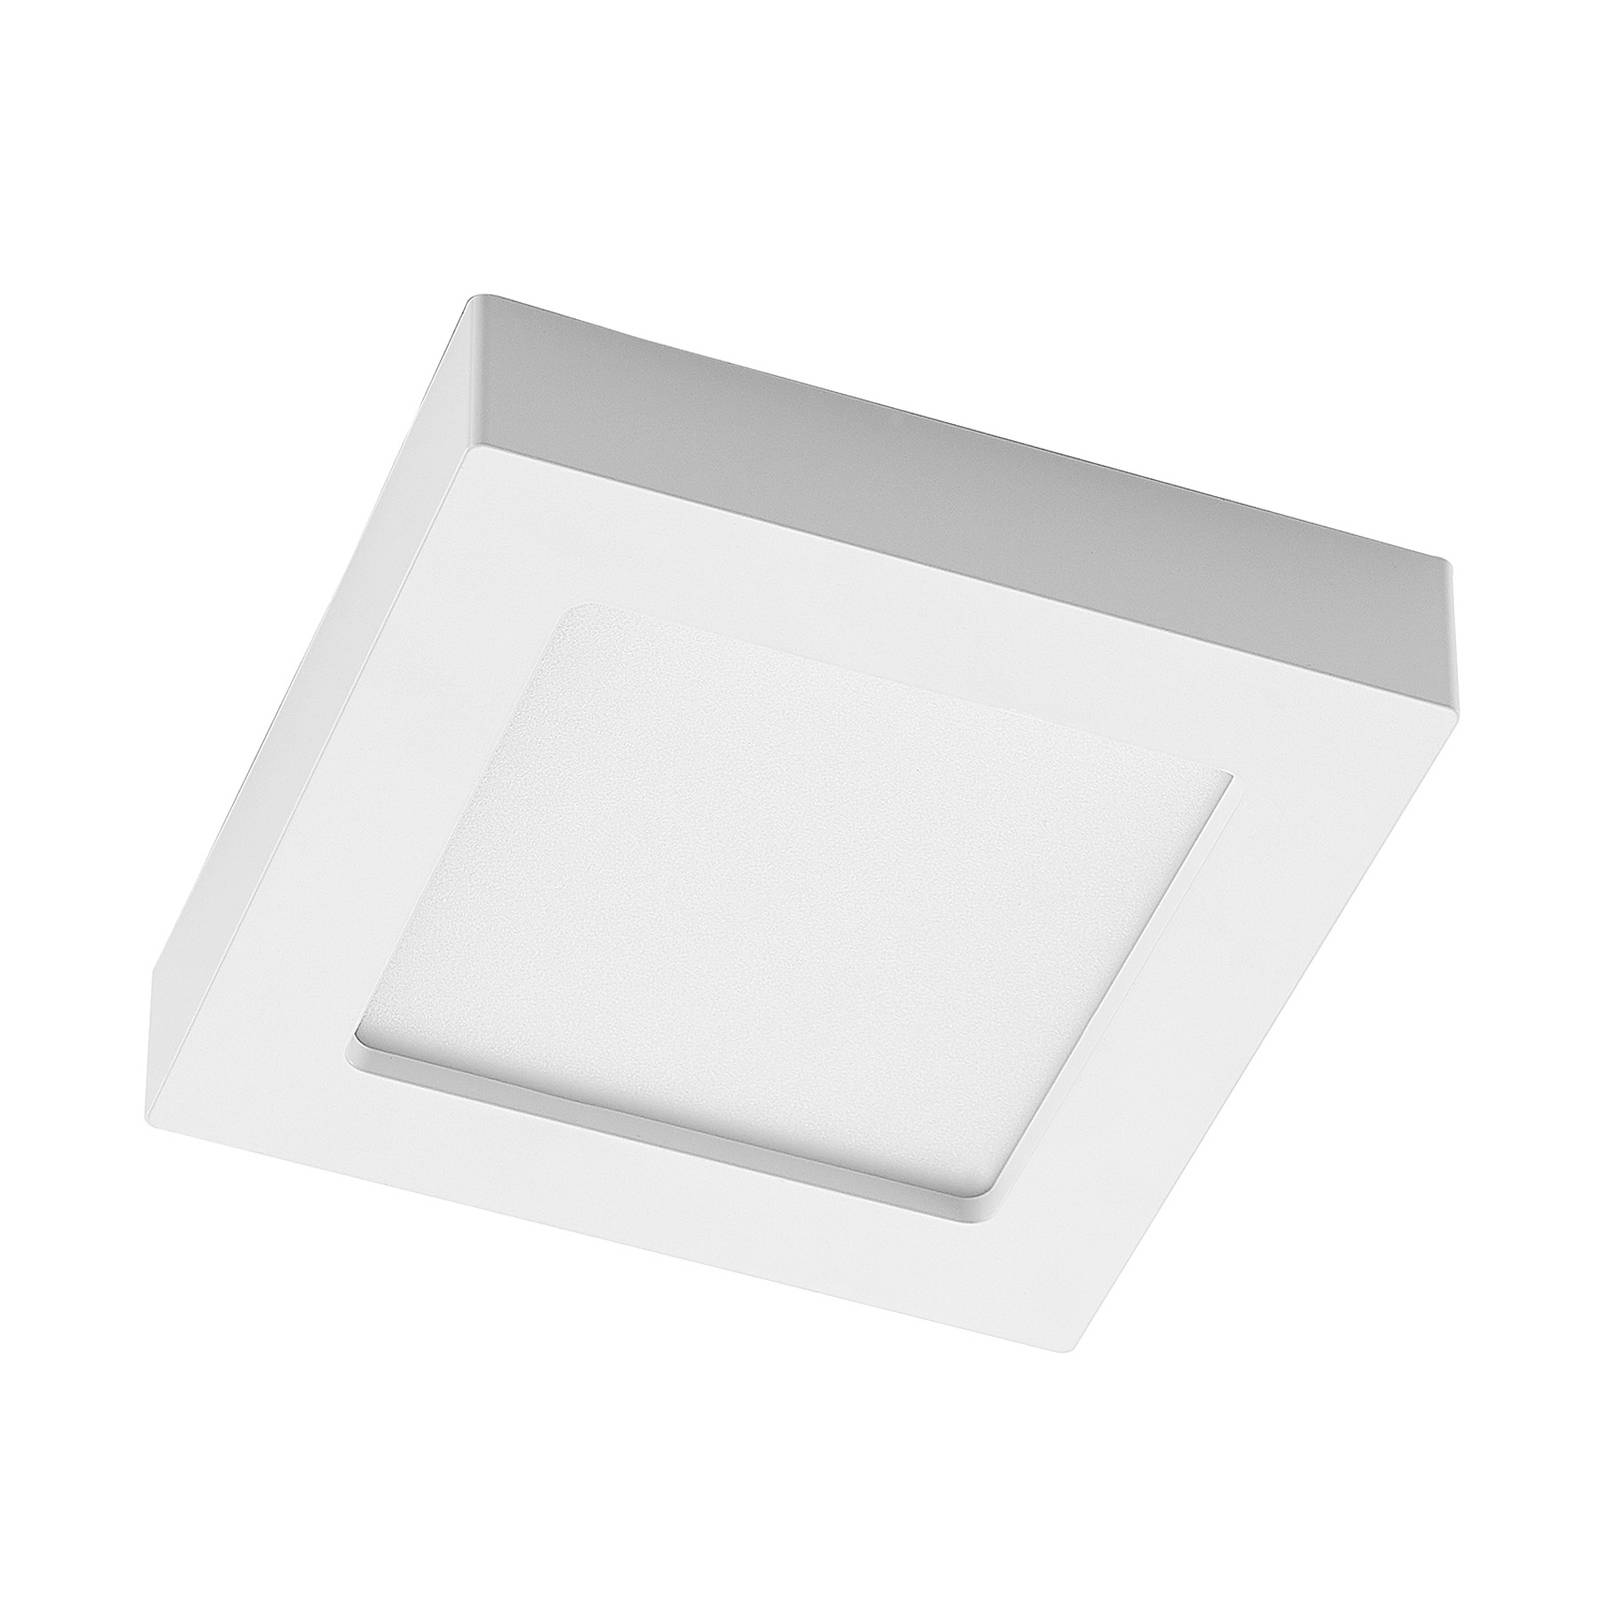 Image of Prios Alette plafonnier LED, blanc, 17,2 cm 4251911707656